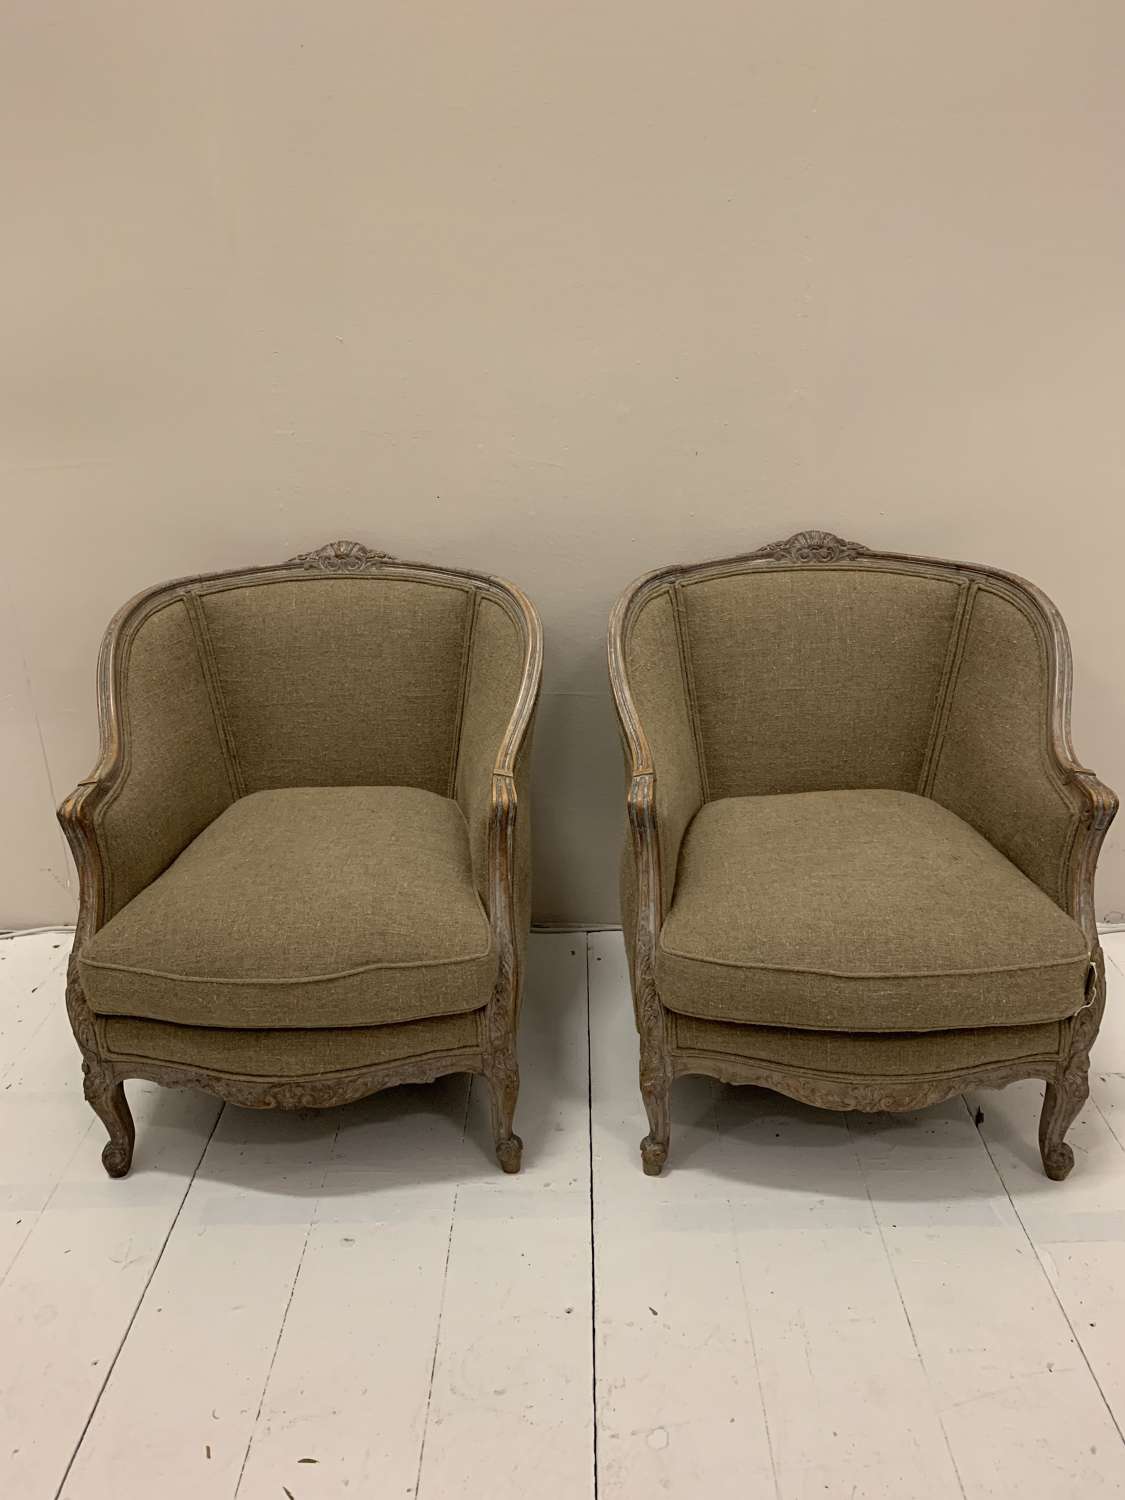 1920’s Swedish pair of fauteuils upholstered in linen